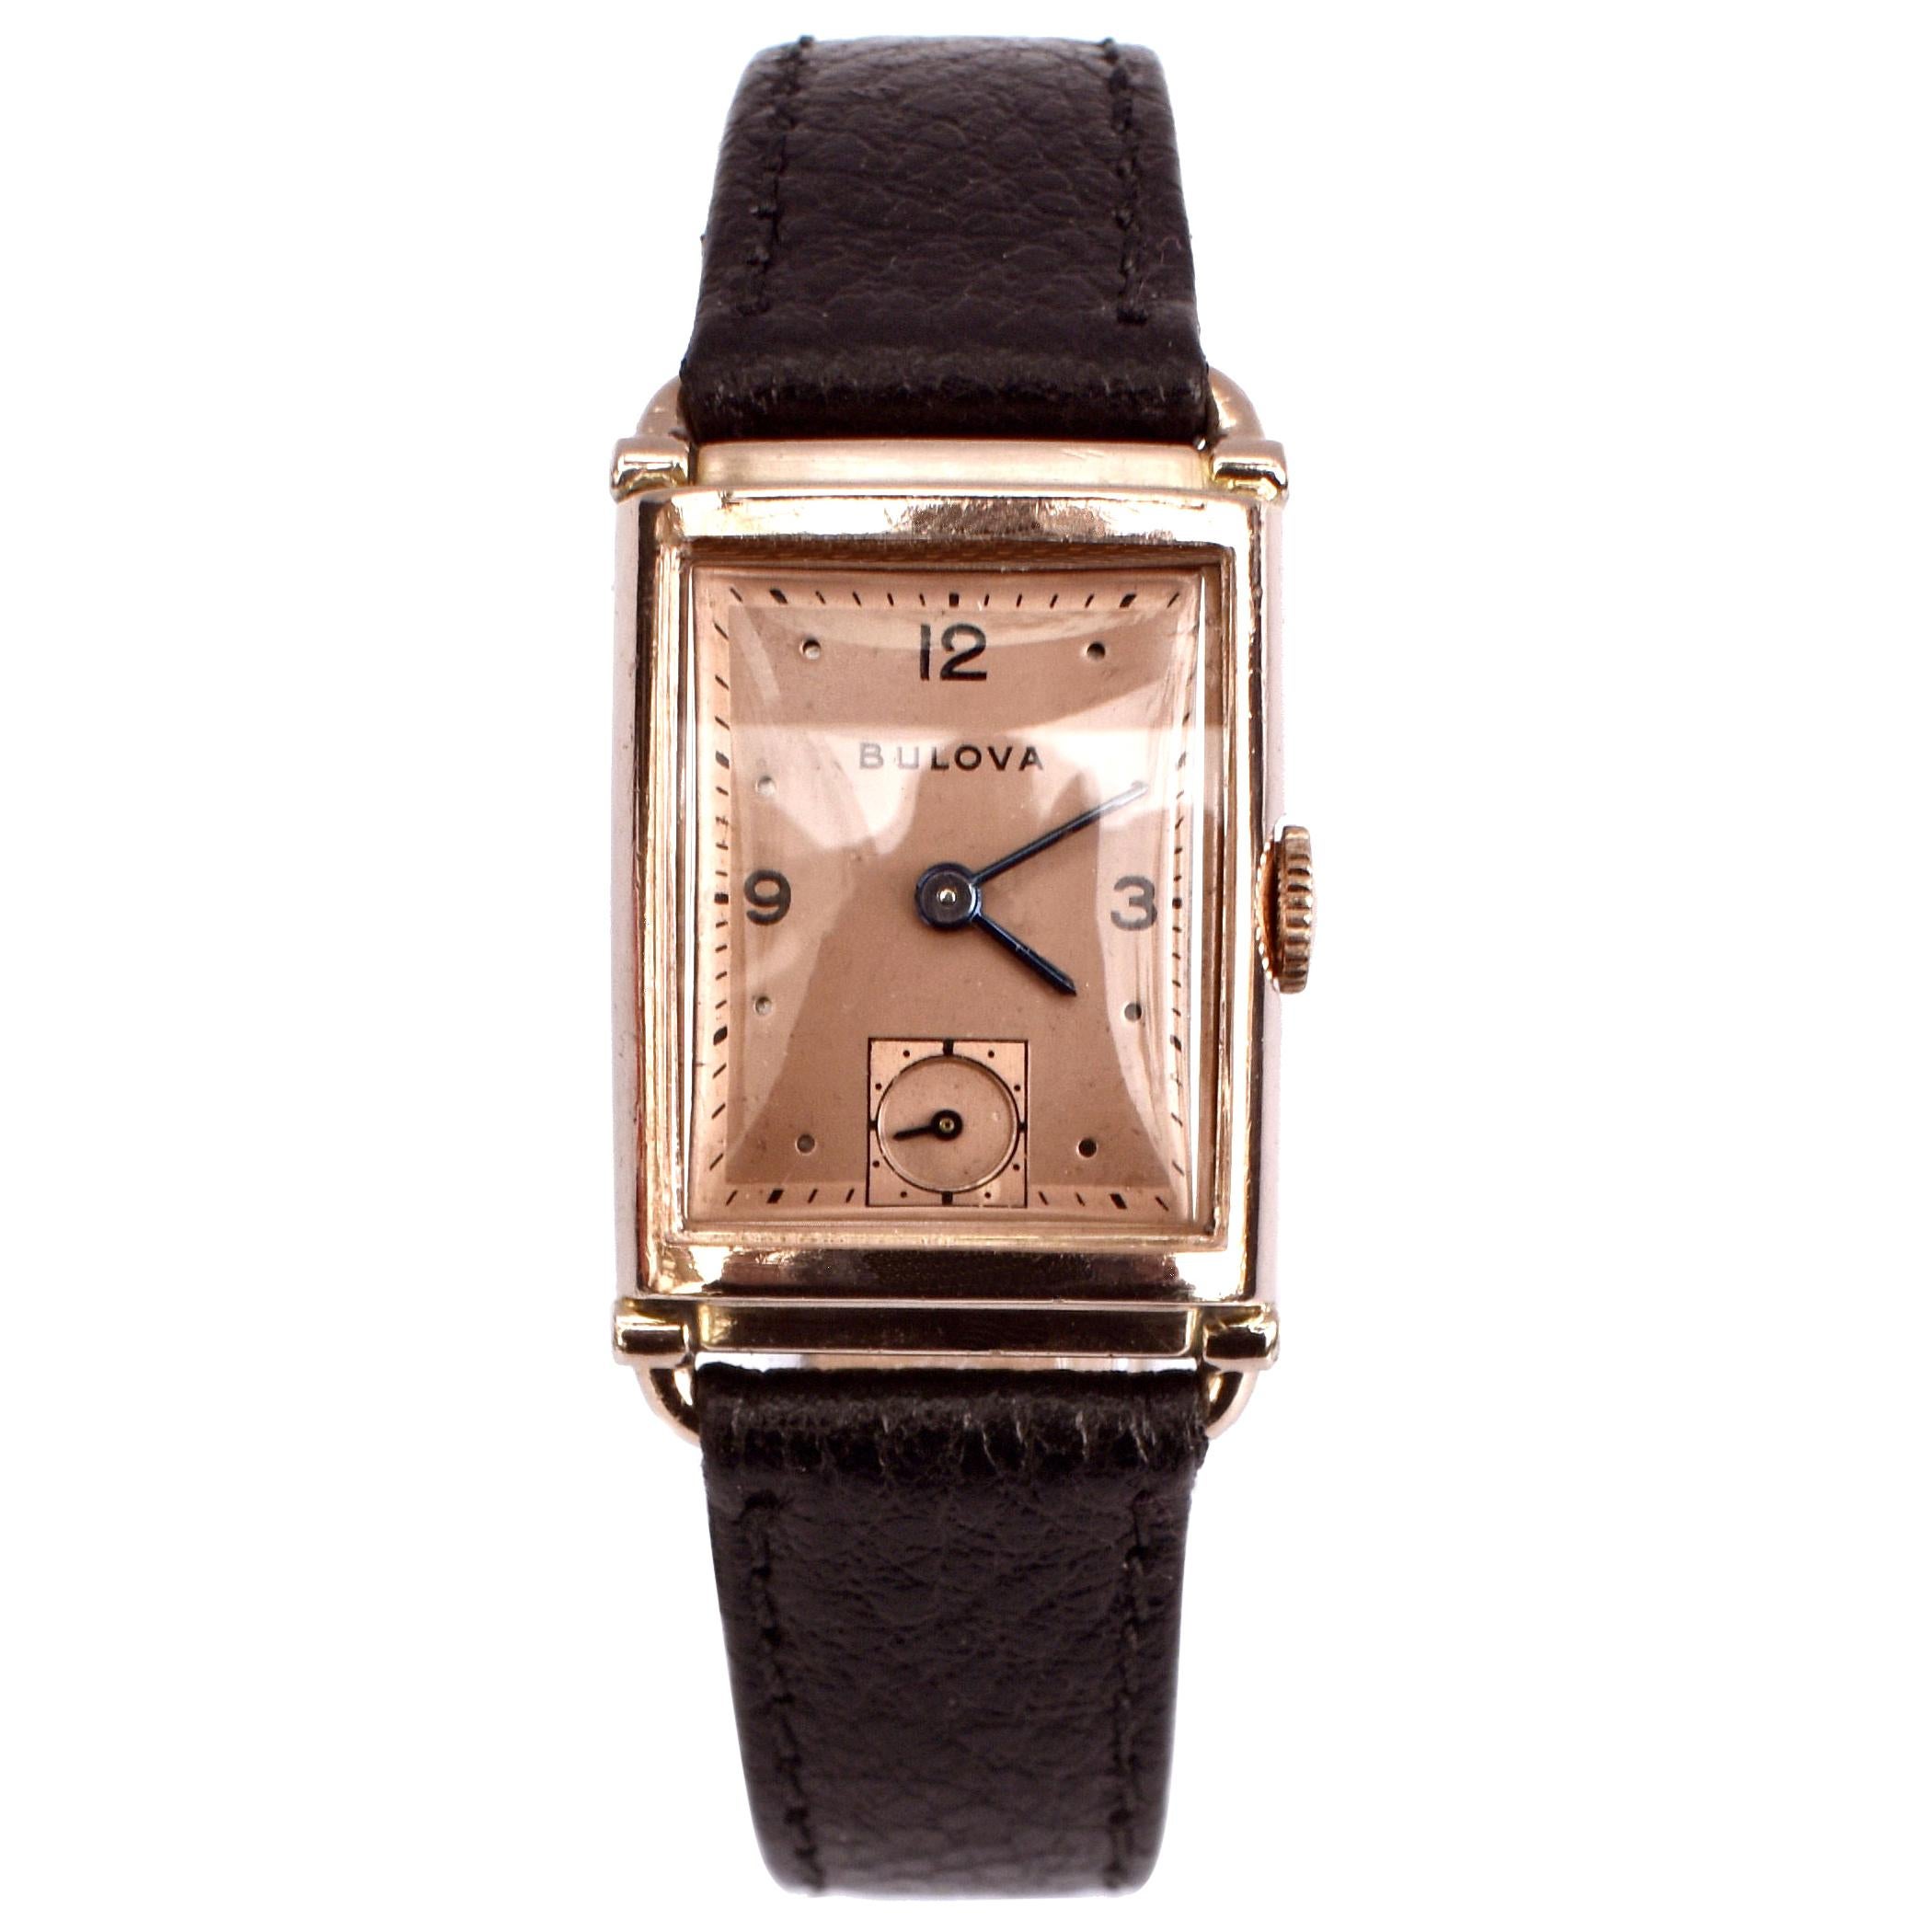 Art Deco Gents 14k Rose Gold Watch, Manual, Newly Serviced by Bulova, c1948